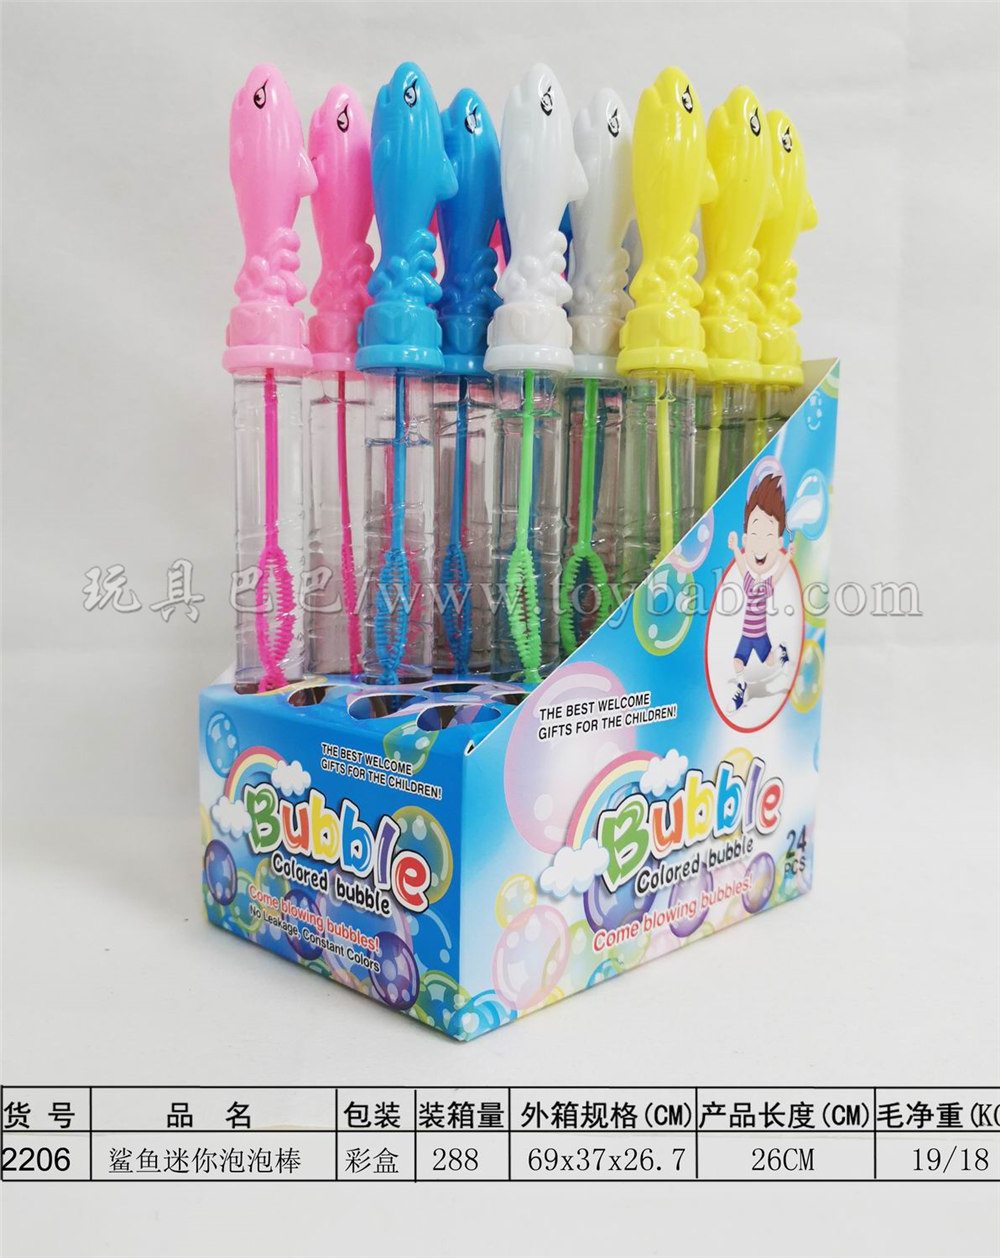 26cm shark bubble stick 24pcs / box (4 colors)